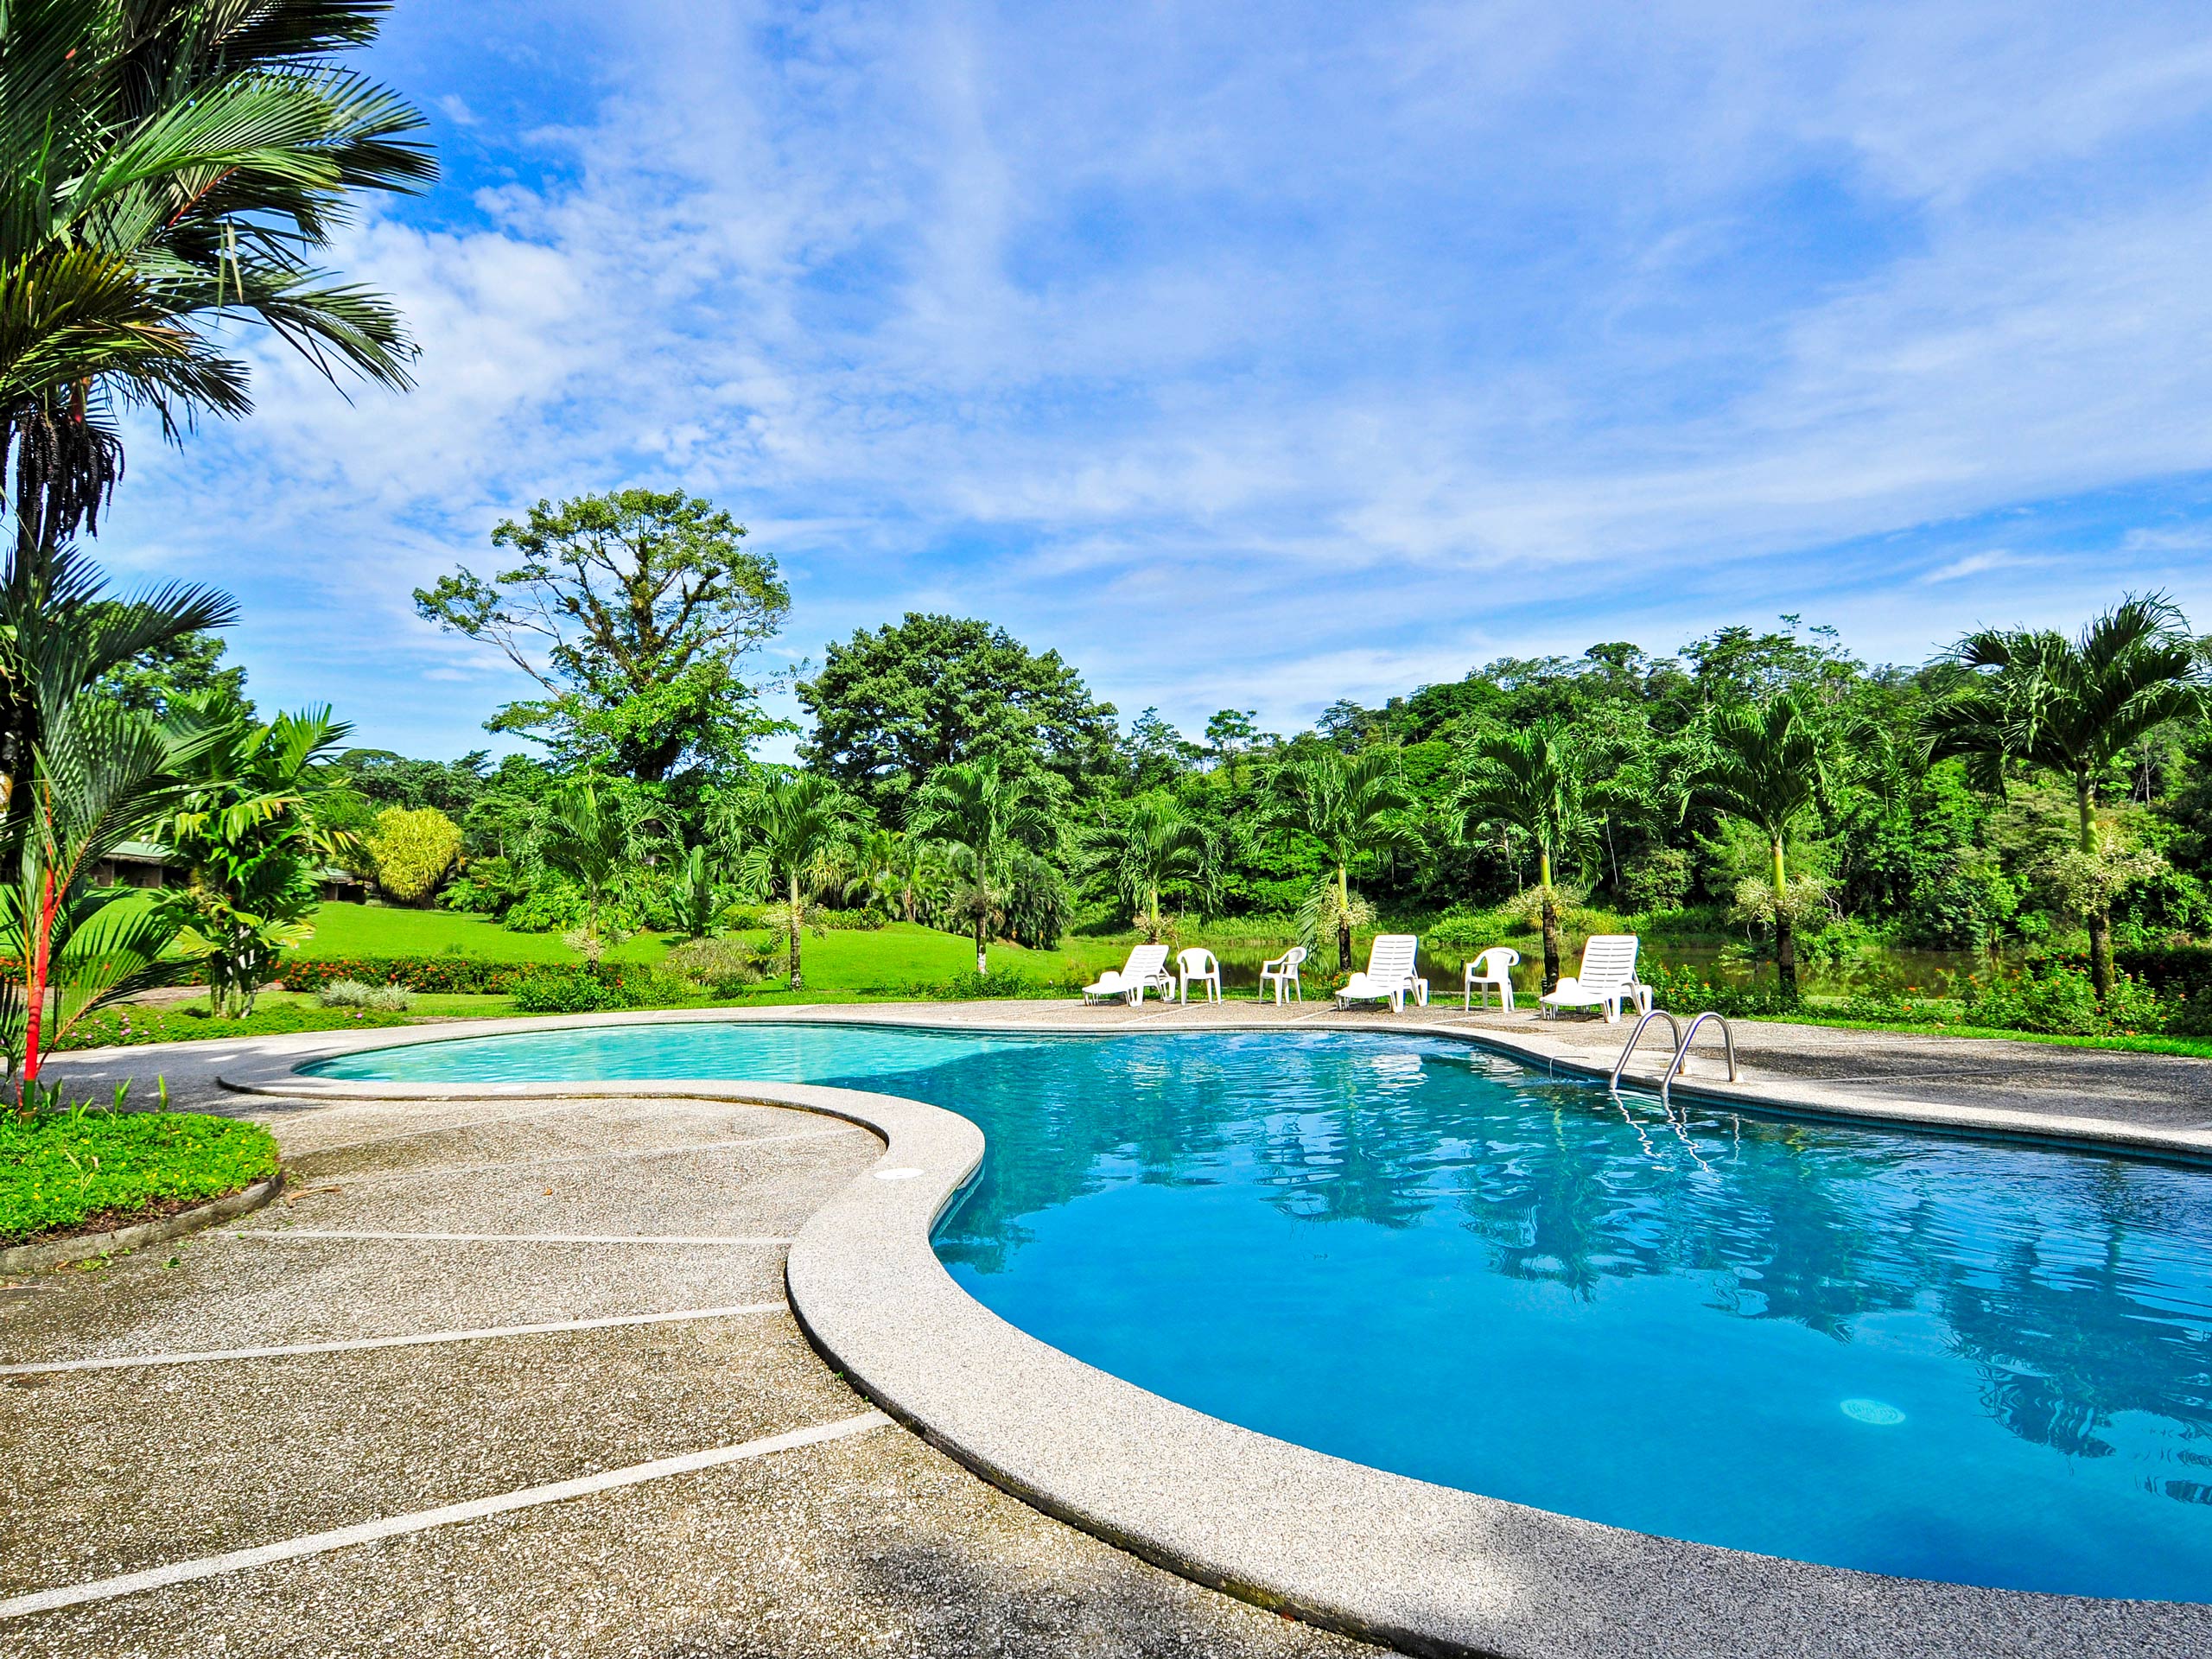 Tropical hotel pool